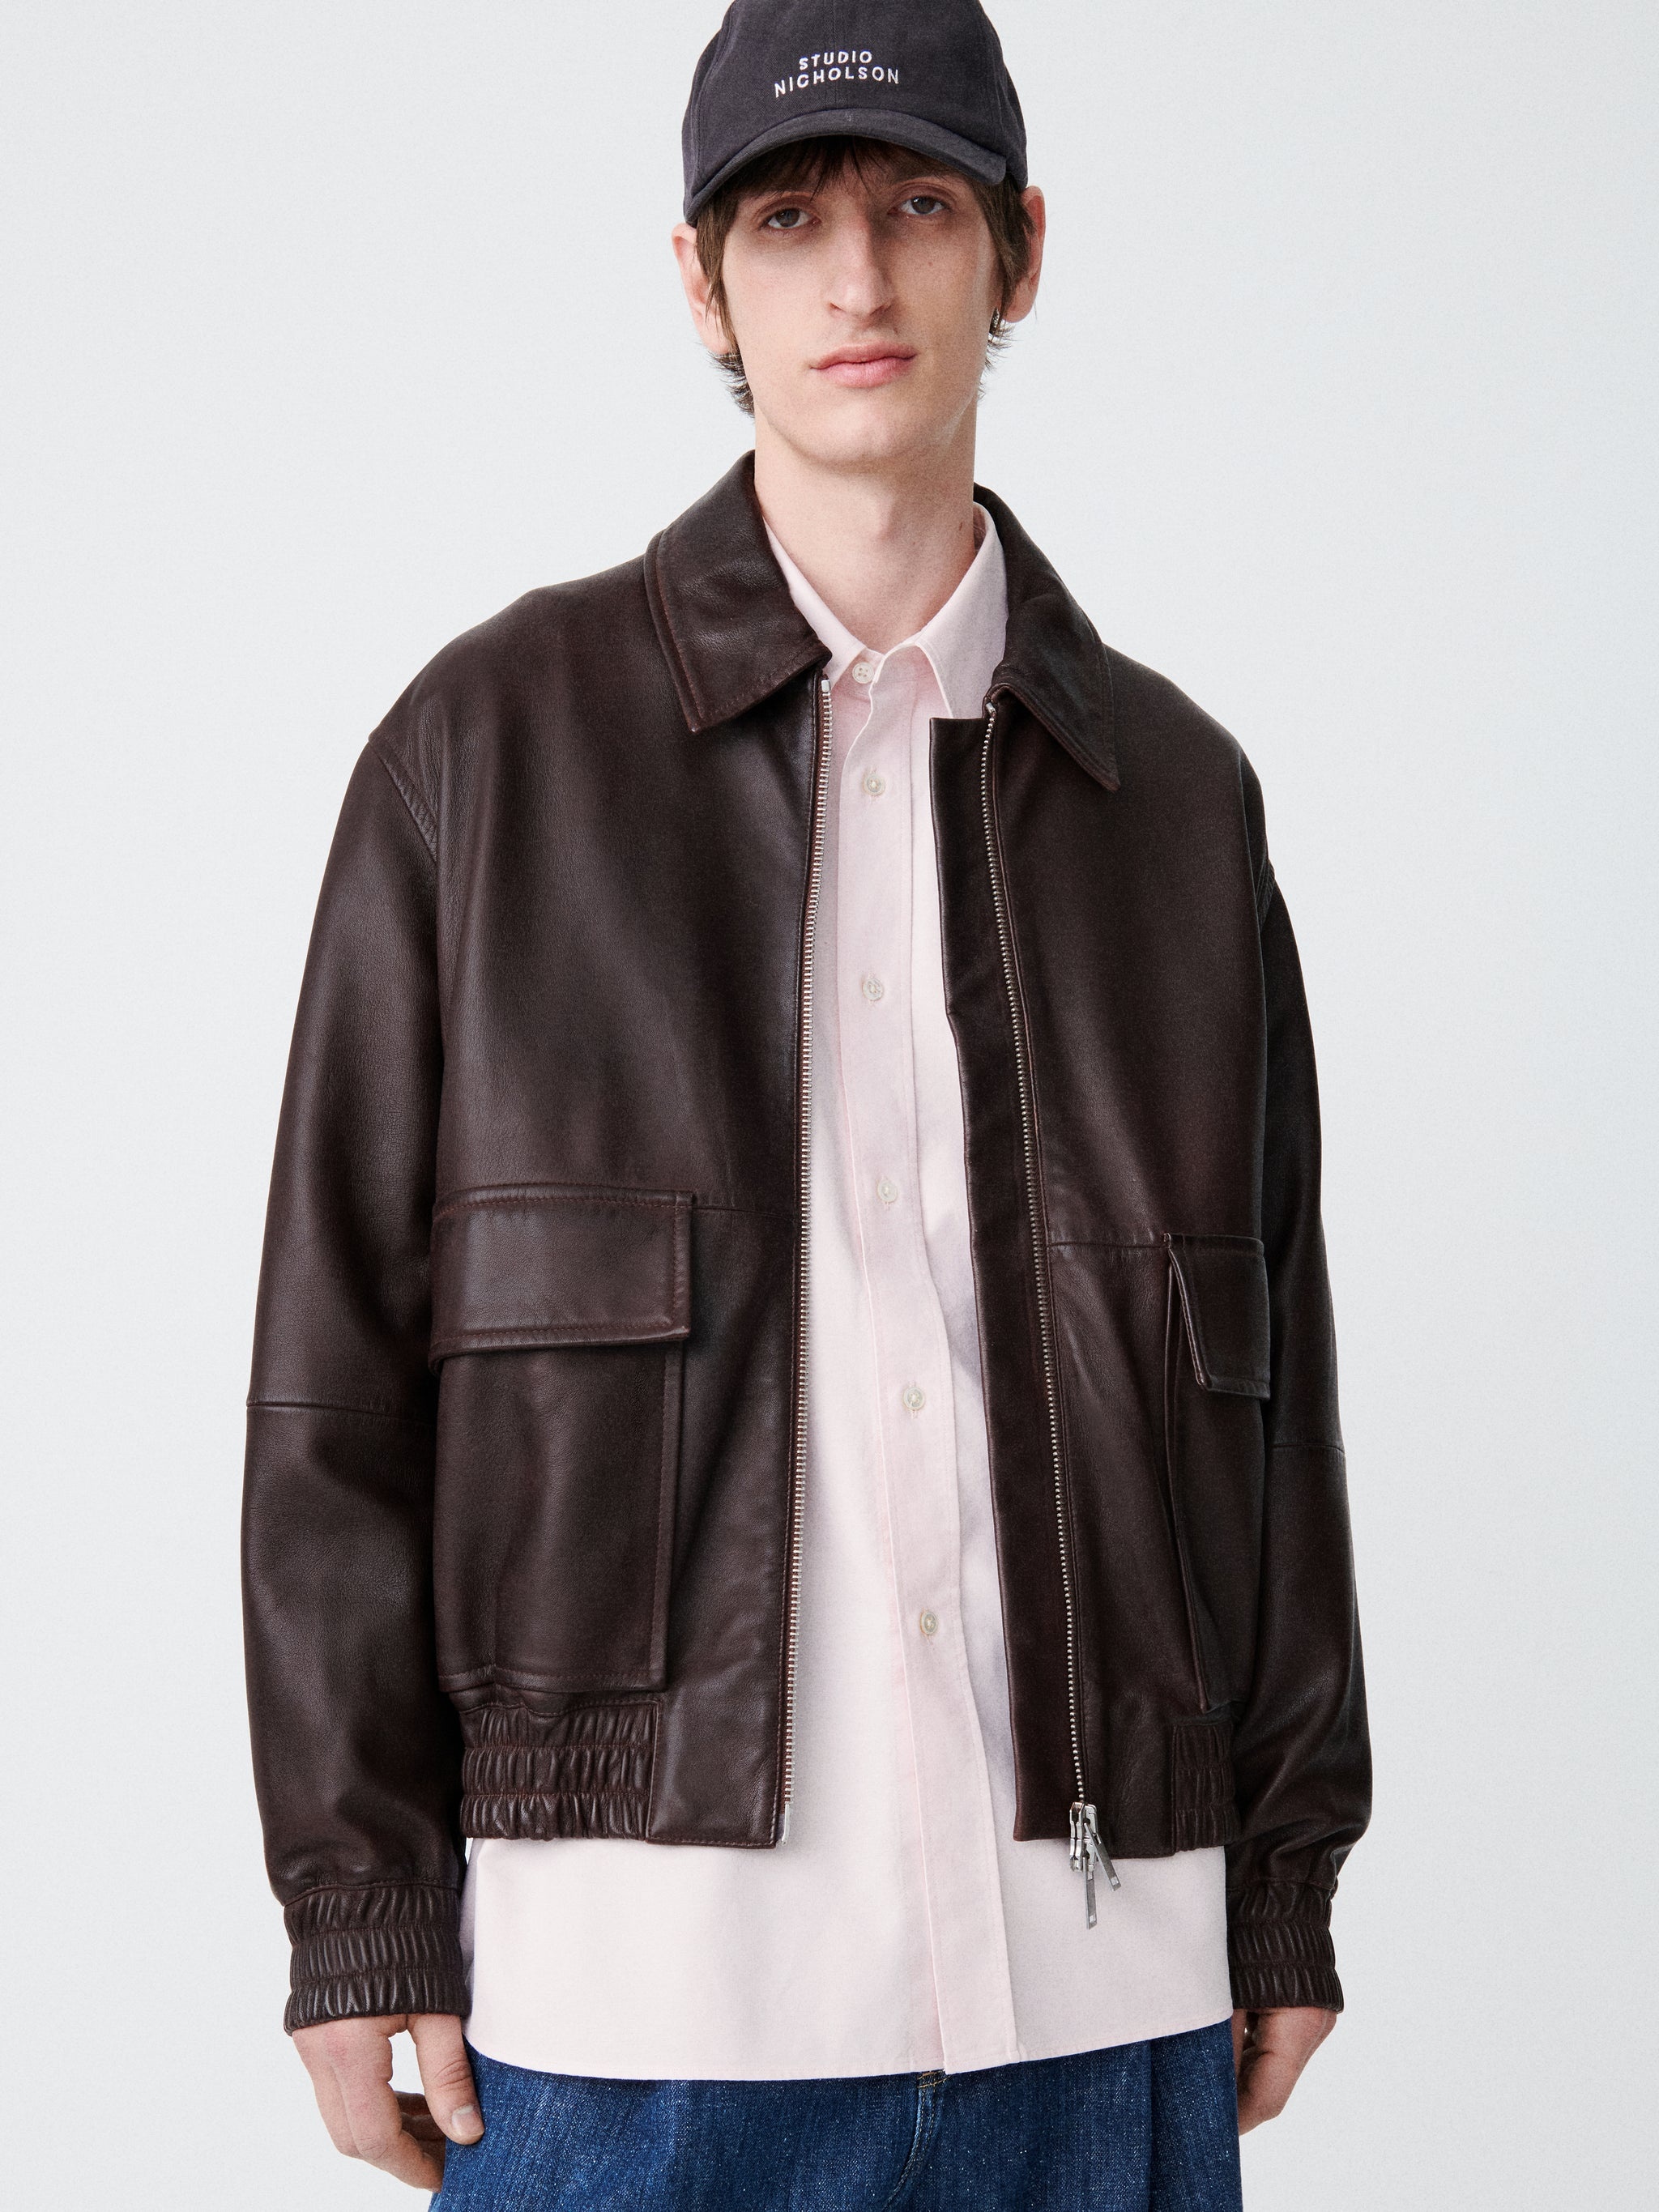 Studio Nicholson Piston Leather Jacket | REVERSIBLE